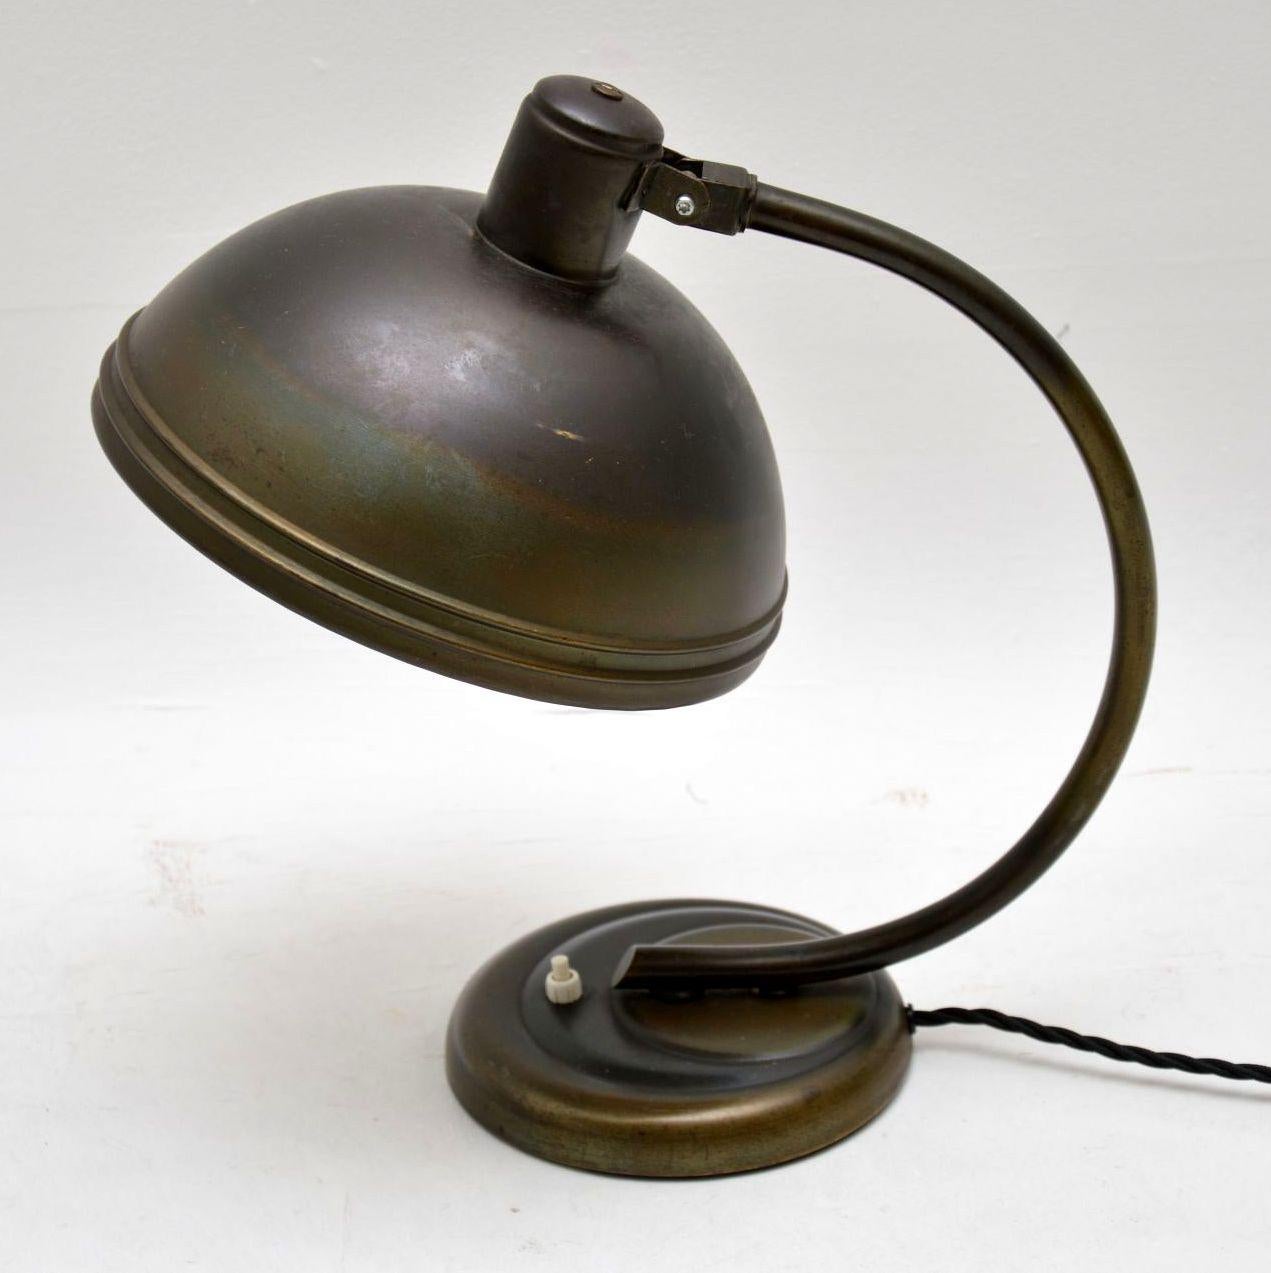 British 1940s Vintage Bauhaus Style Desk Lamp